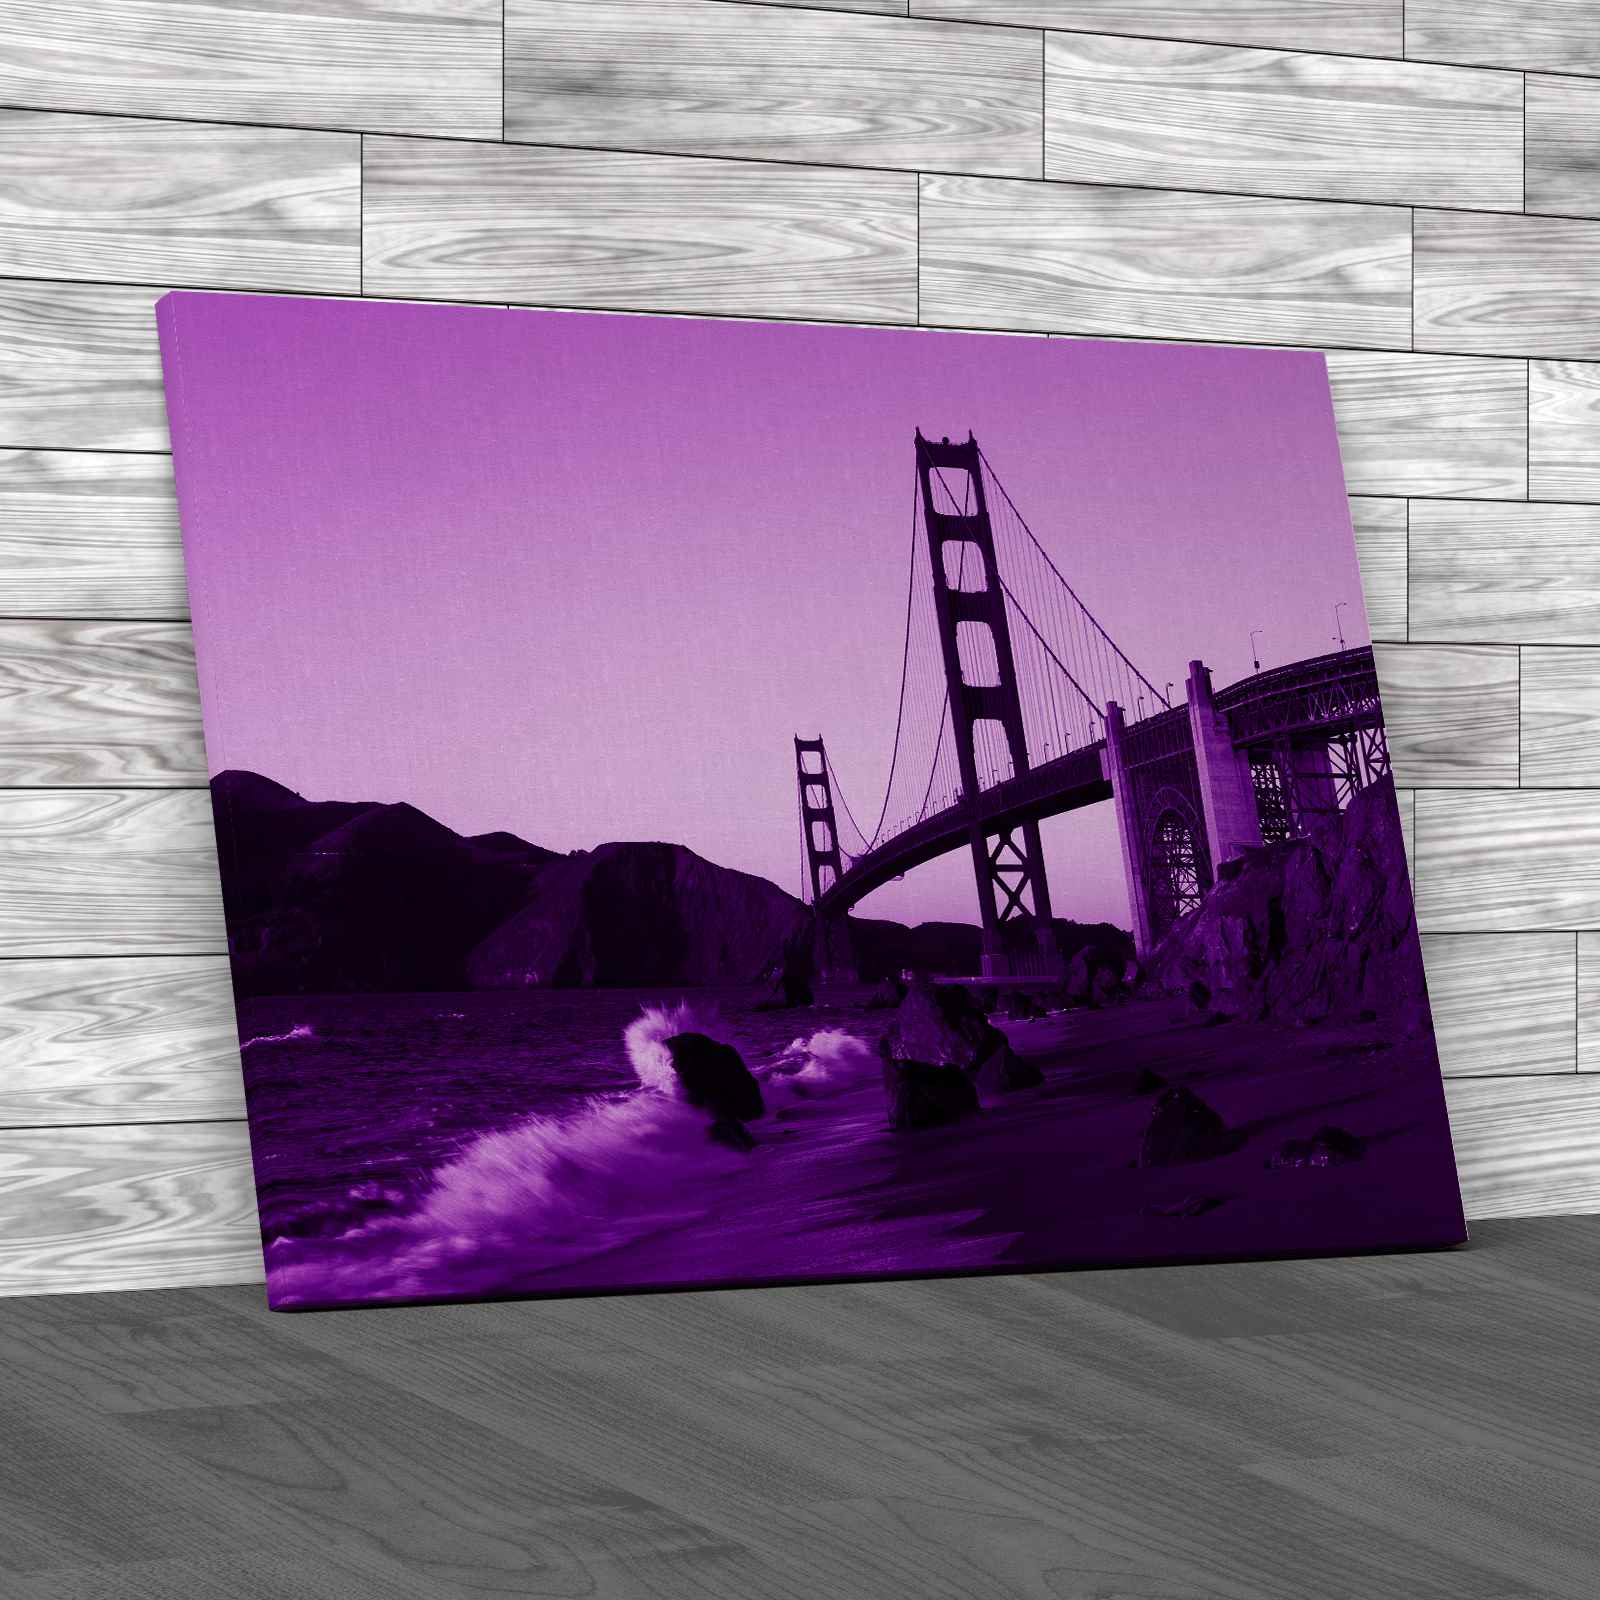 Golden Gate Bridge Canvas Print Large Picture Wall Art | eBay